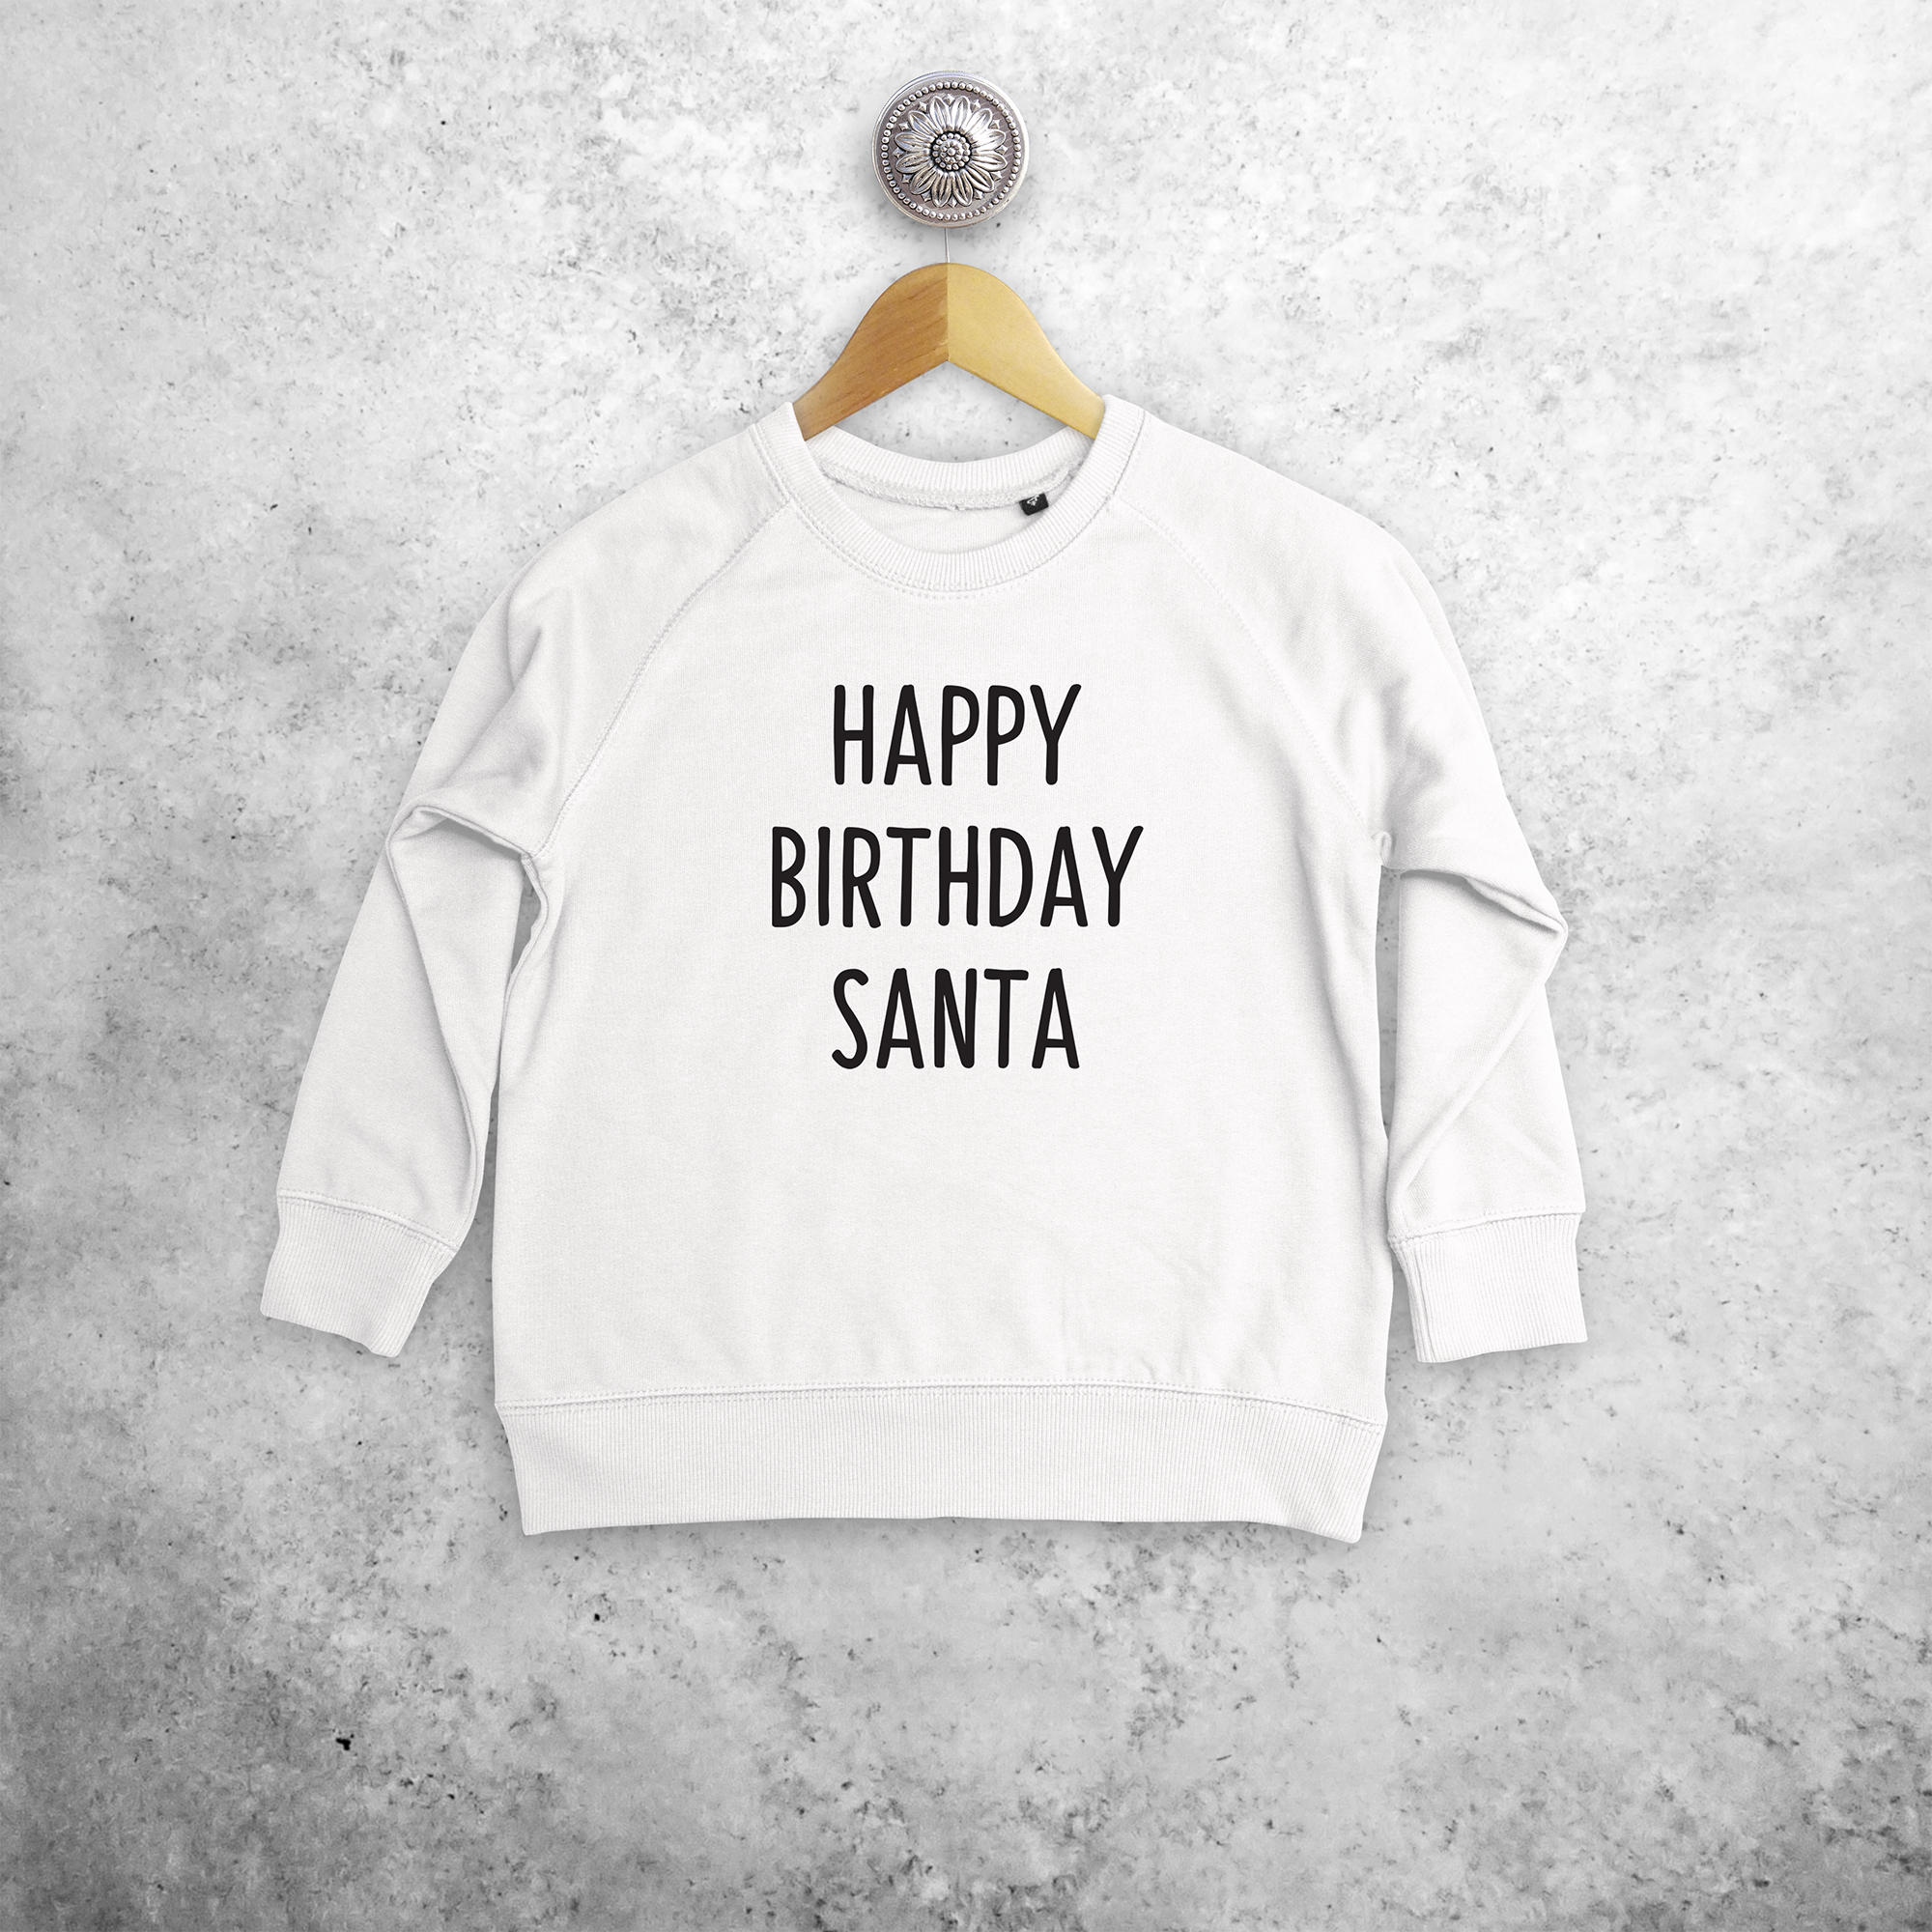 'Happy birthday Santa' kids sweater